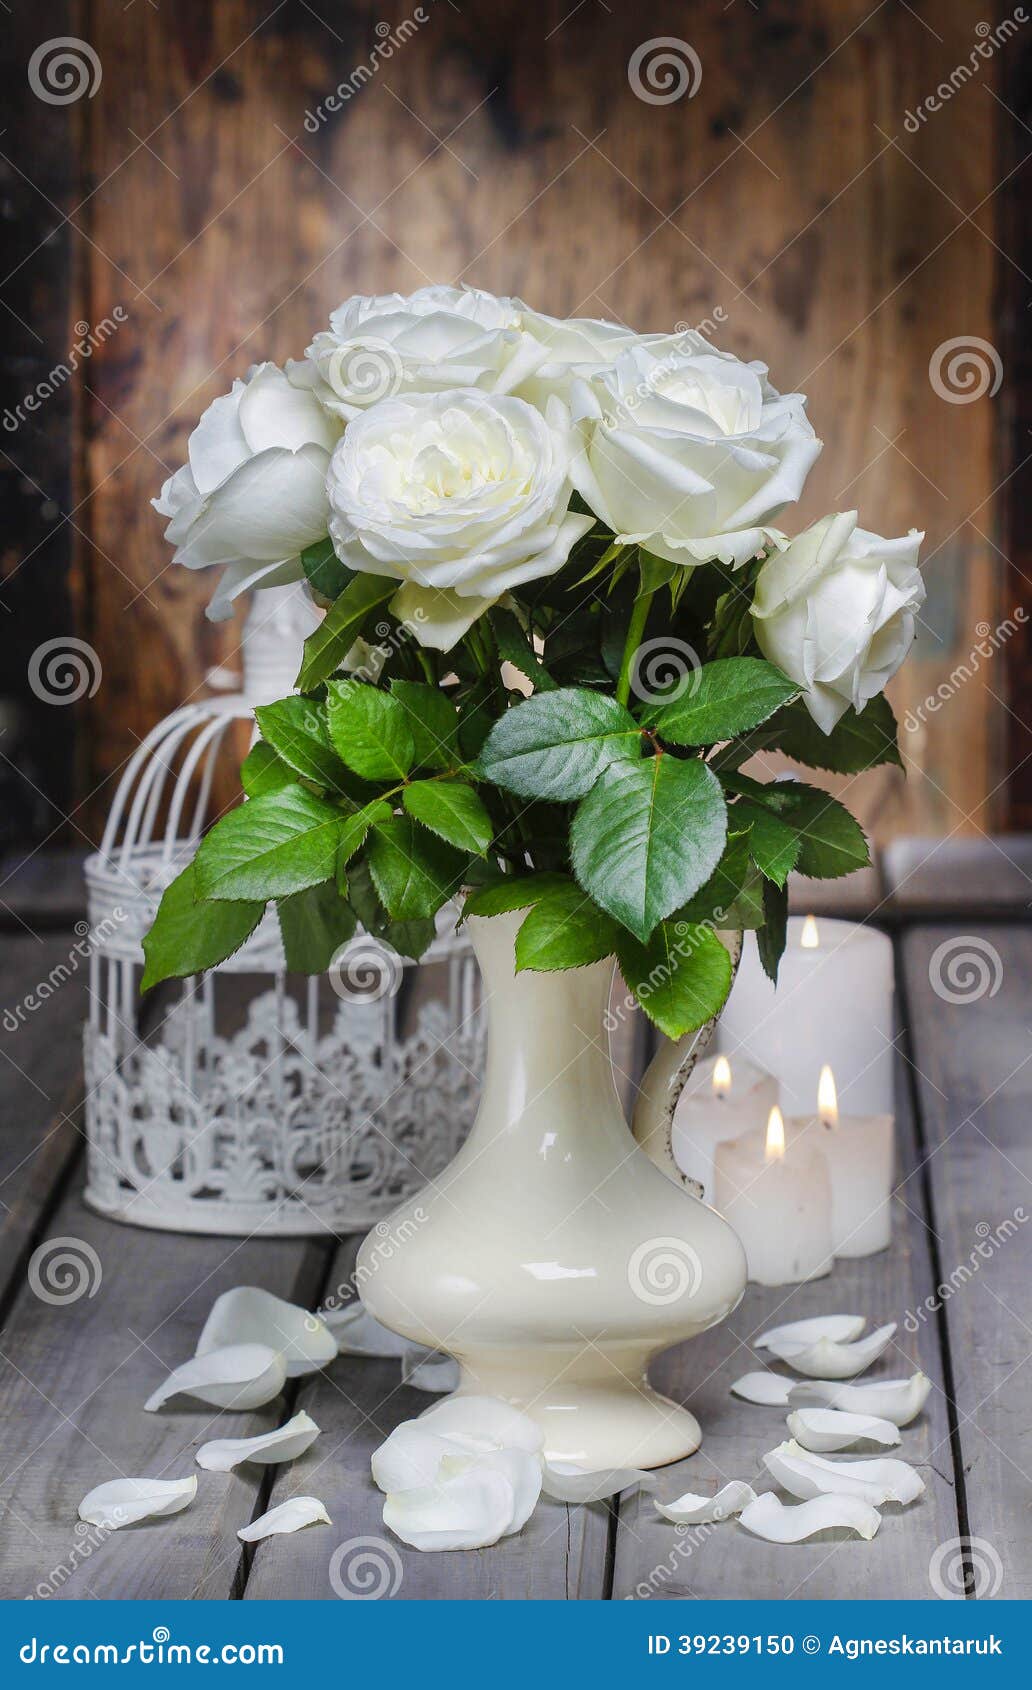 Stunning White Roses In Ceramic Vase Stock Photo - Image 